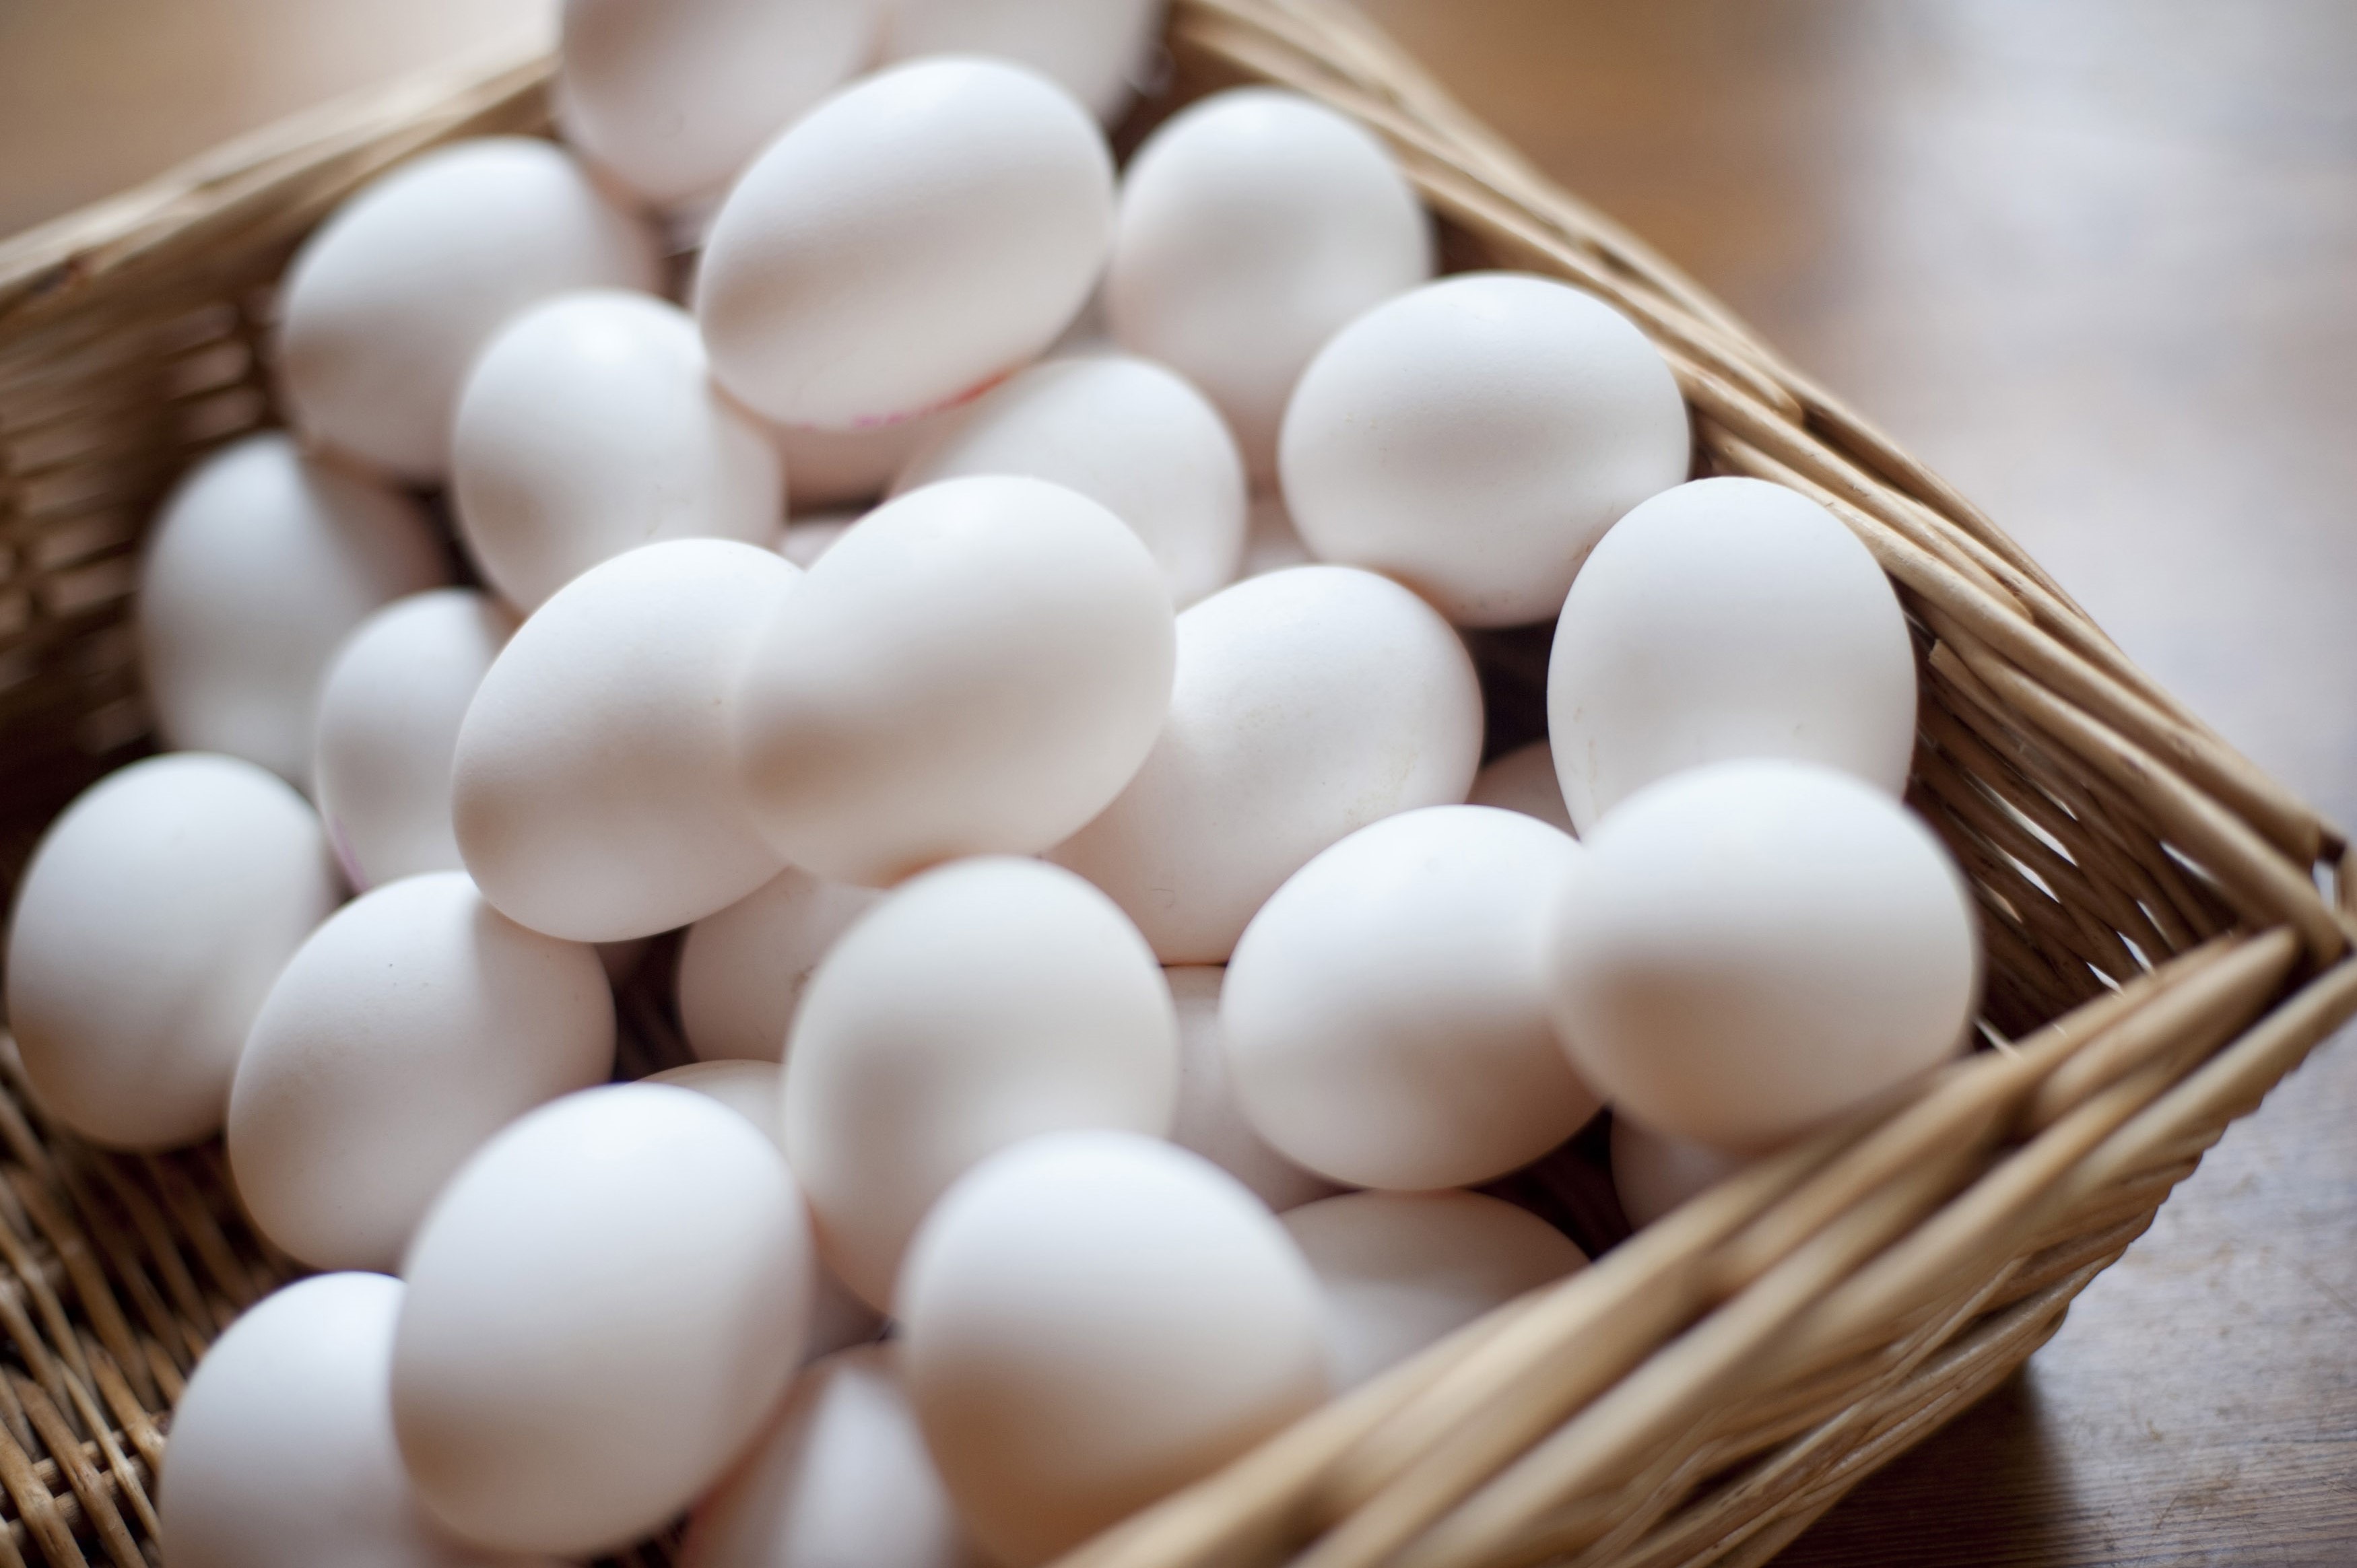 Basket of fresh eggs - Free Stock Image